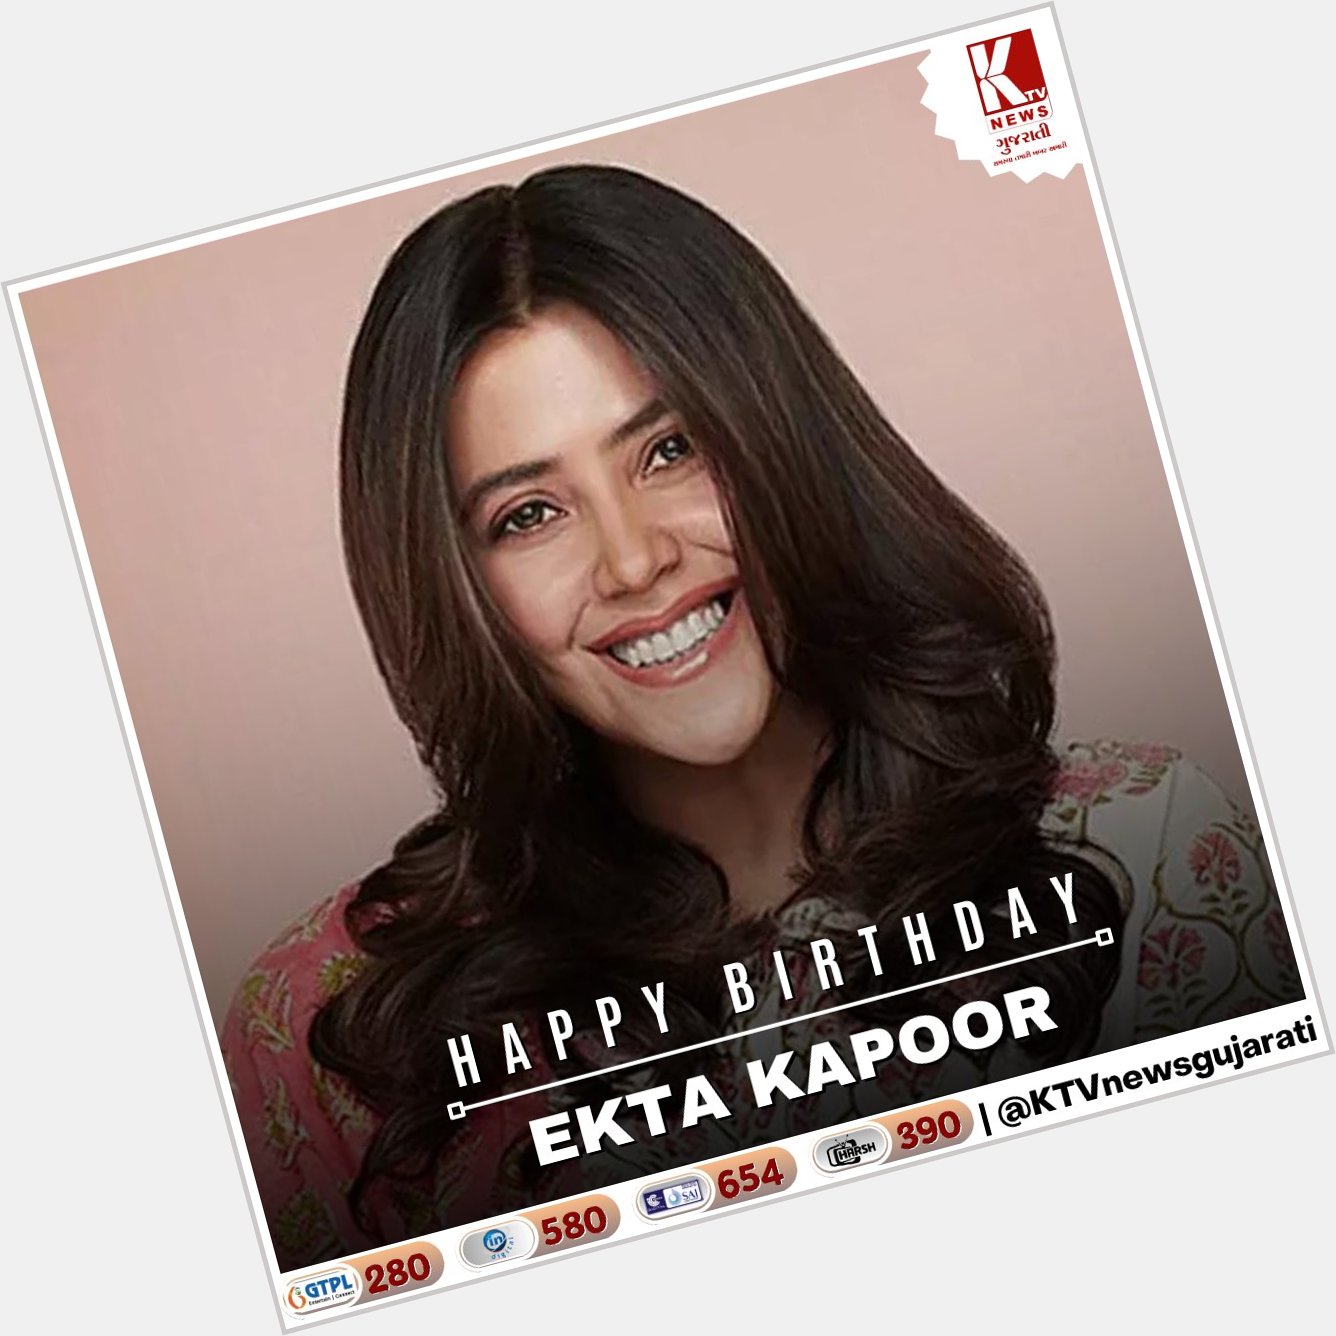 Happy Birthday Ekta Kapoor
.
.
.     